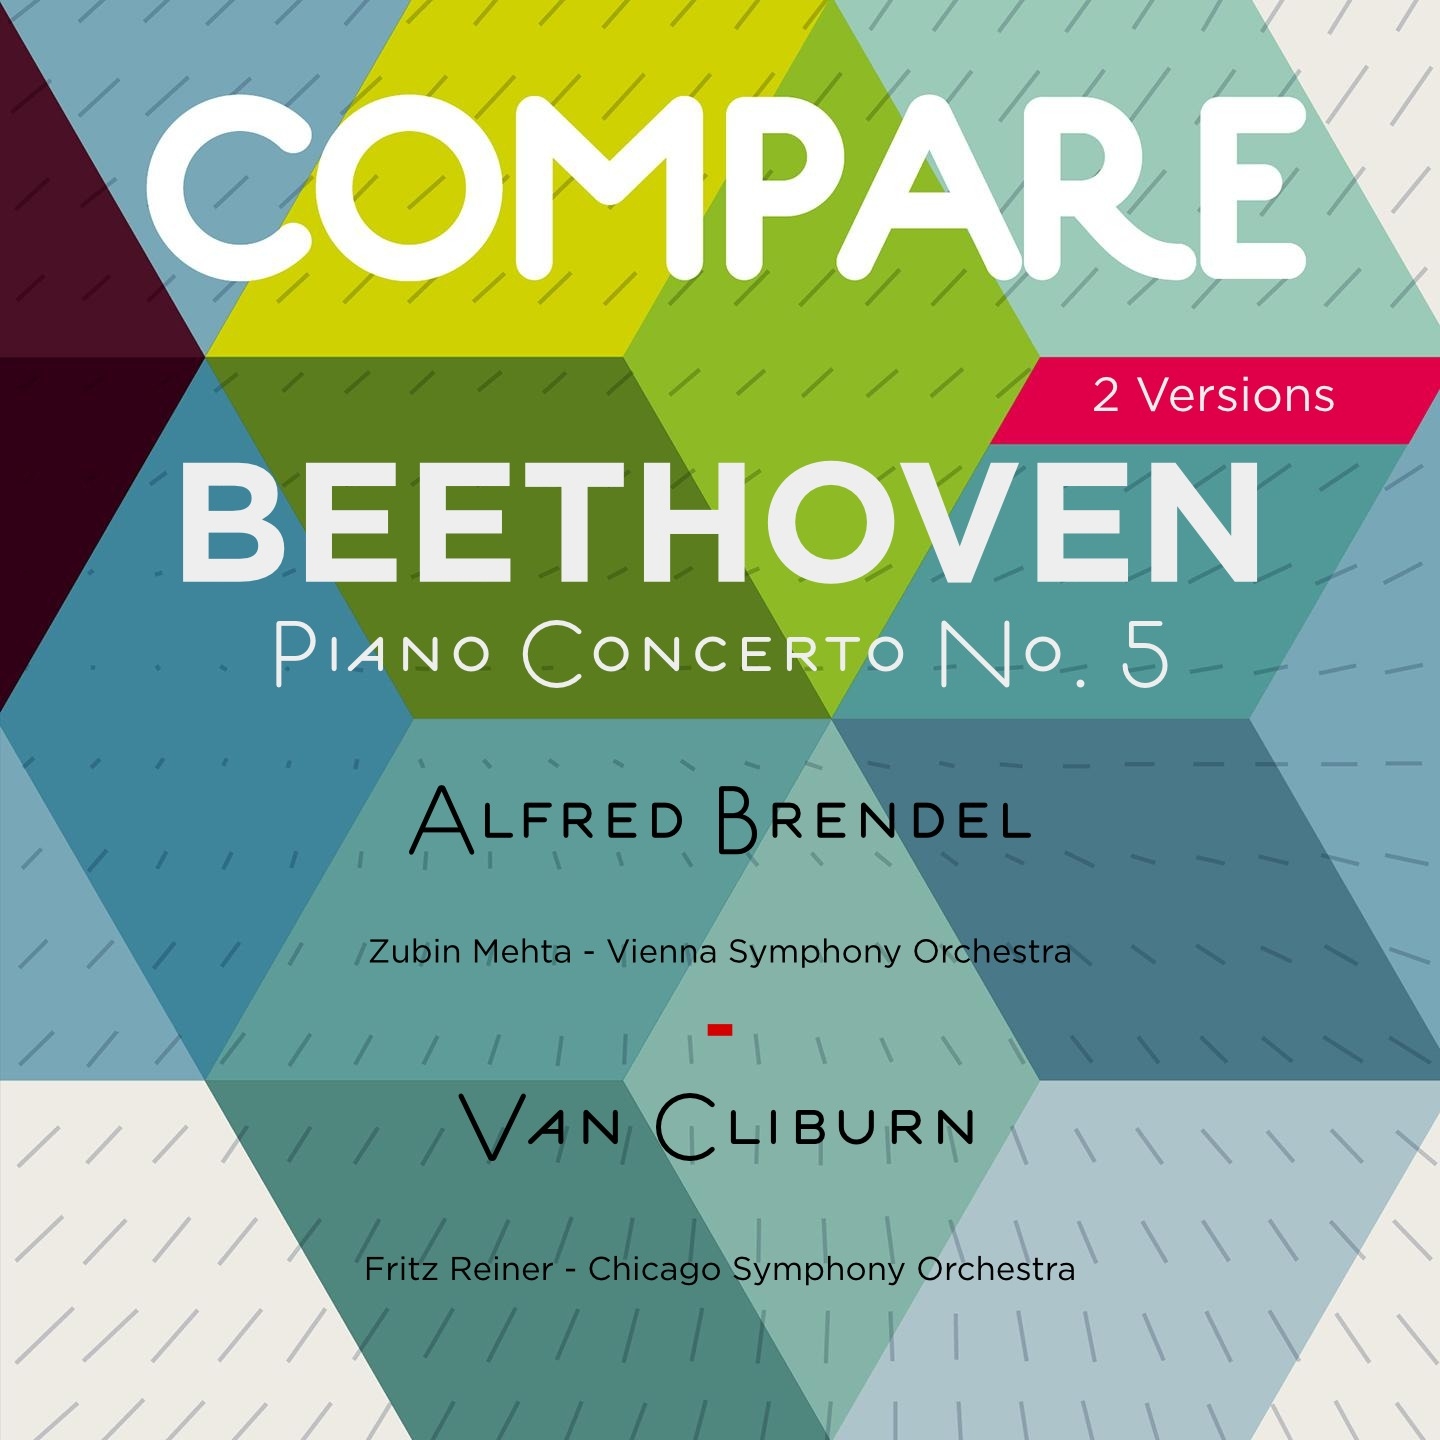 Beethoven: Piano Concerto No. 5, Alfred Brendel vs. Van Cliburn